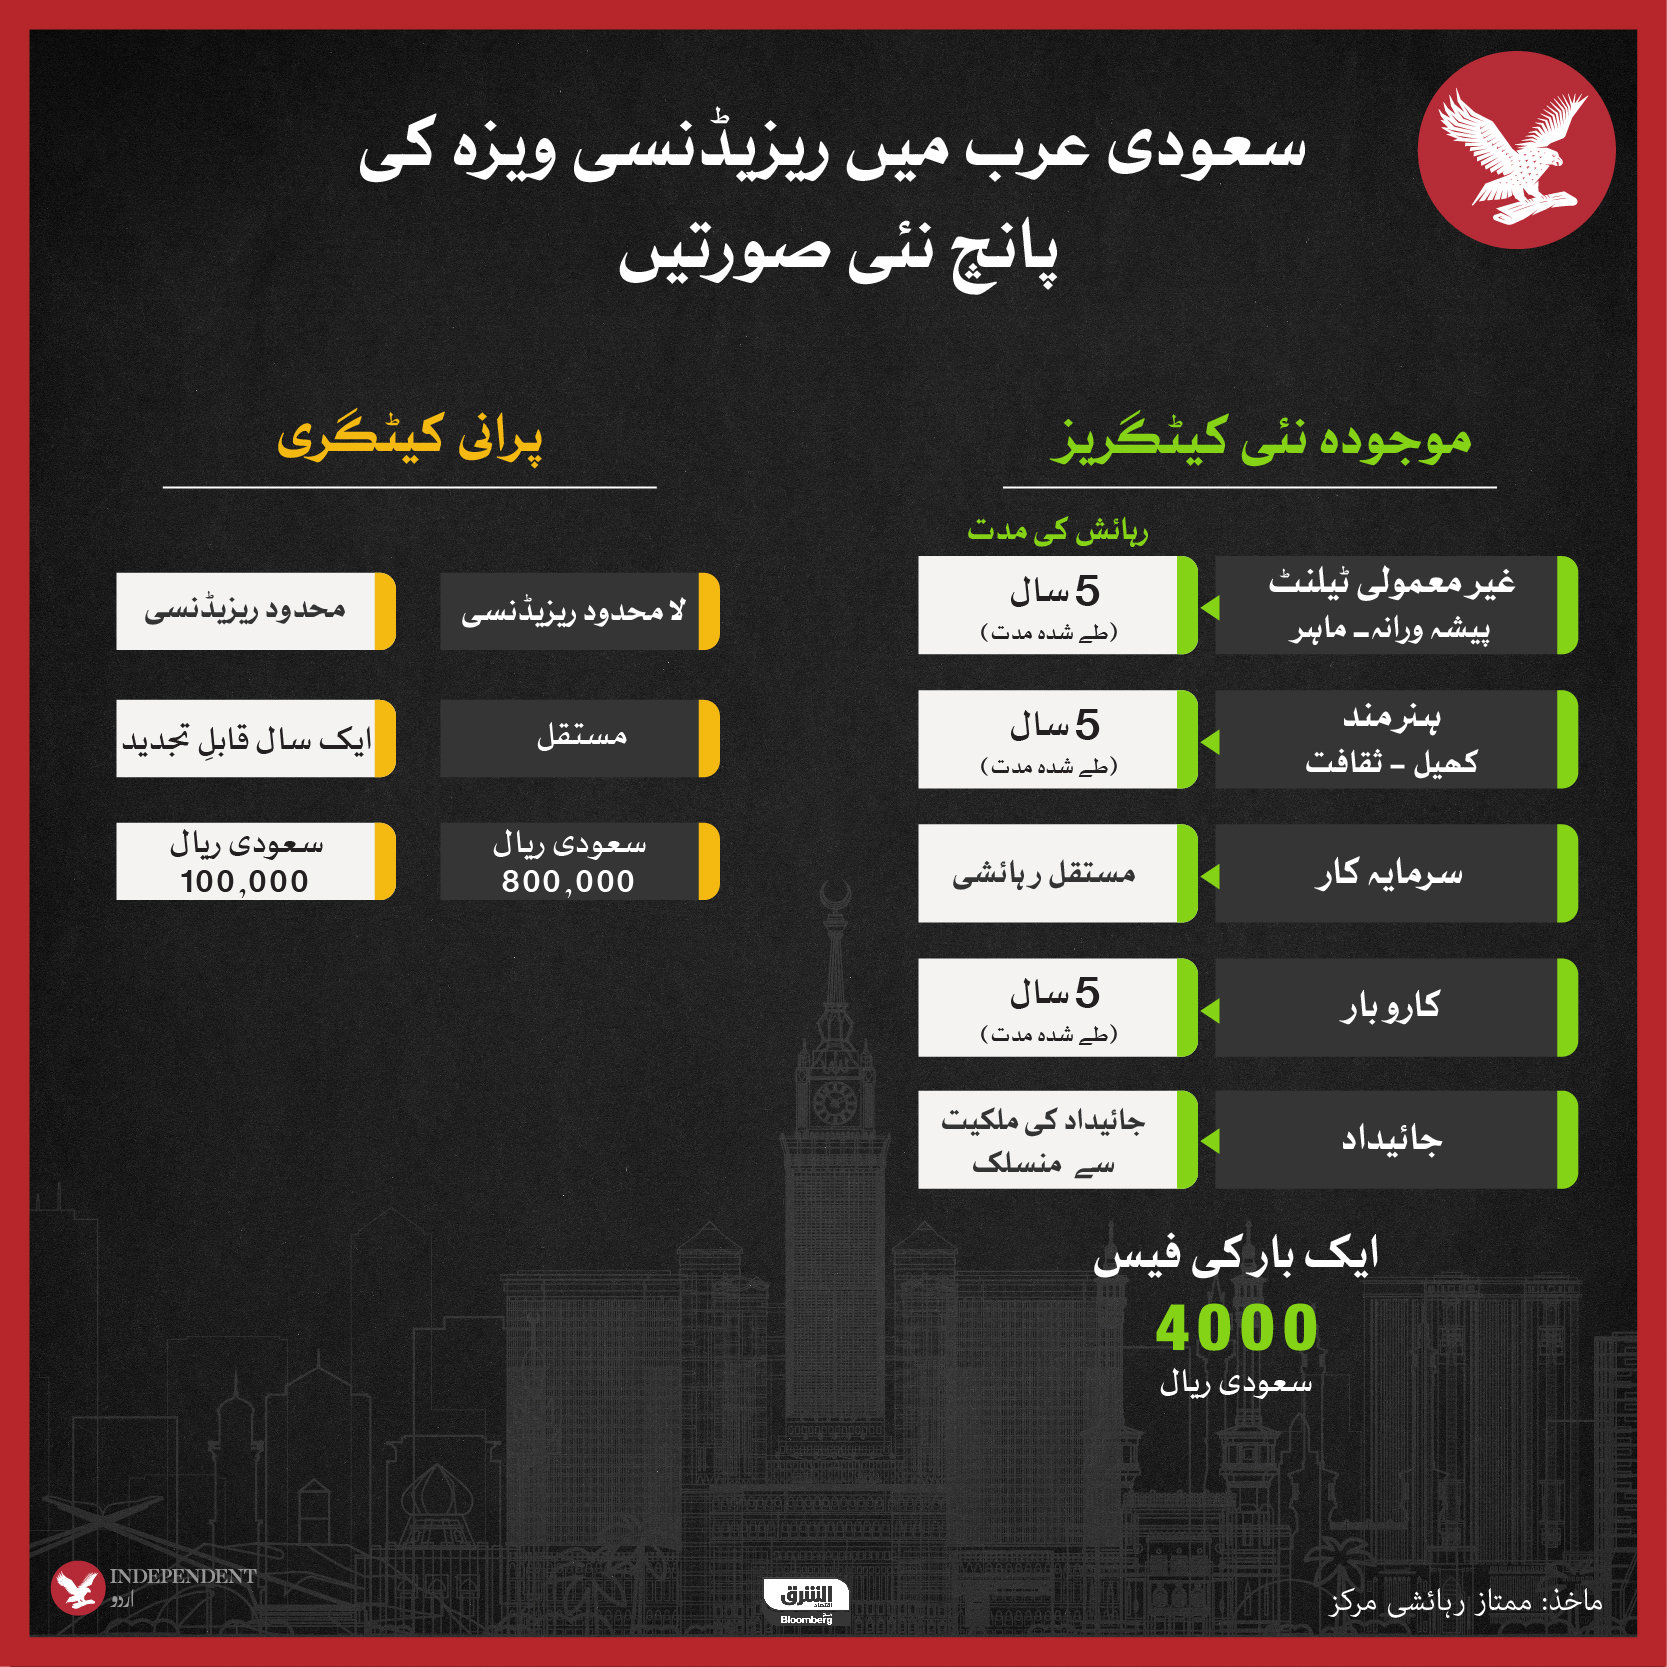 saudi_arabia_new_residence_policy-01.jpg